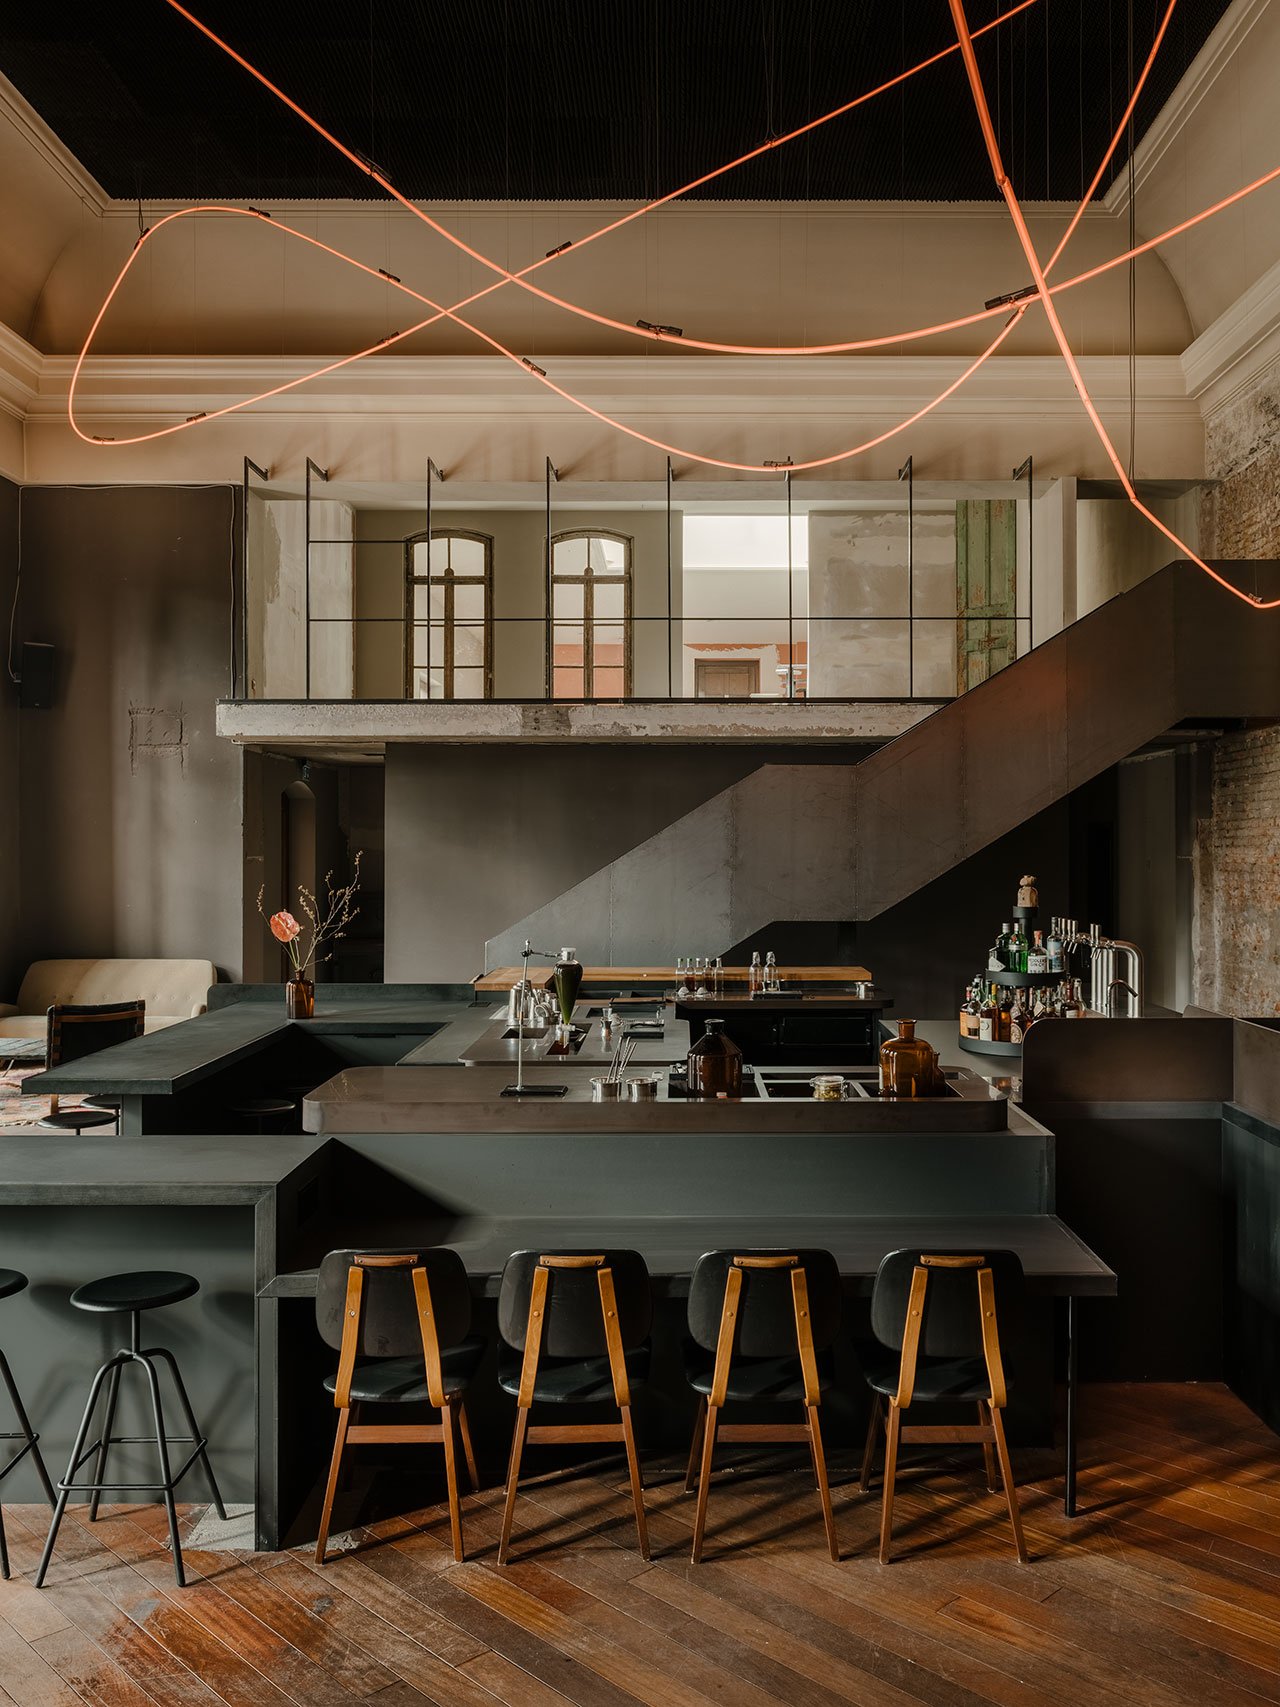 KINK Bar &amp; Restaurant.
Bar design in collaboration with Hidden Fortress.Bar stools by Atelier Haussmann.
Photography by Robert Rieger. Courtesy of Kerim Seiler.